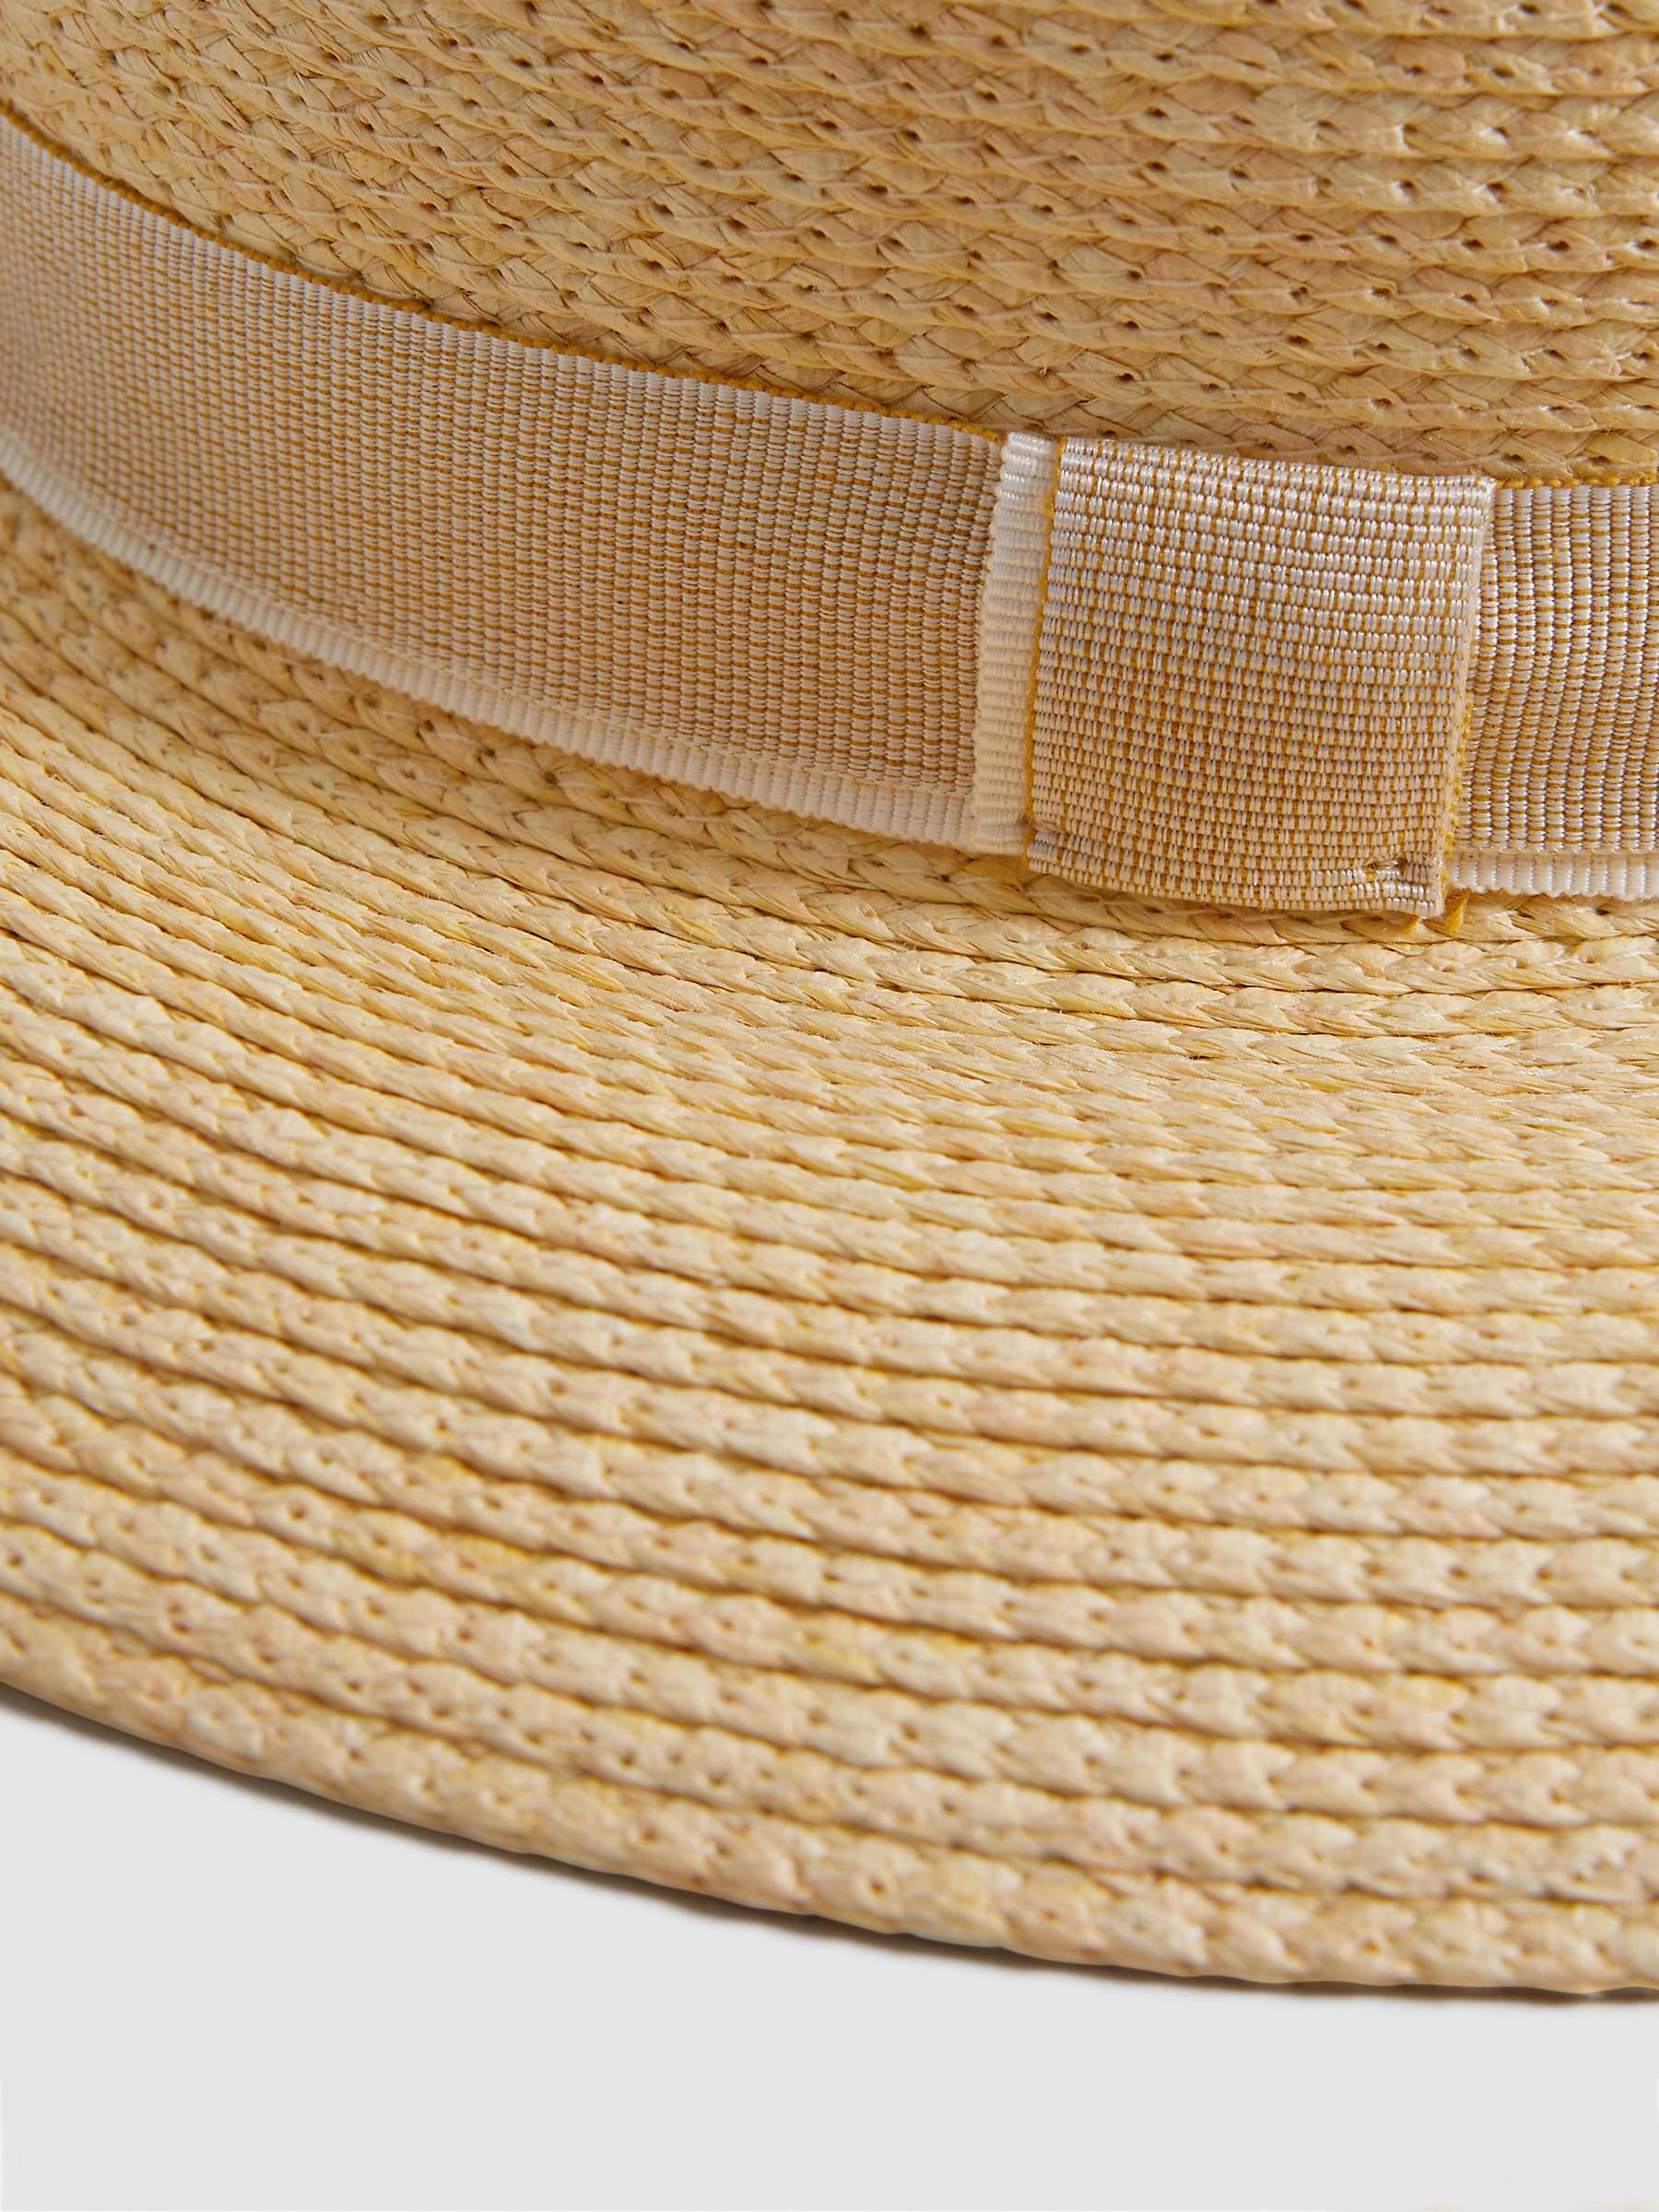 Buy Reiss Gracie Short Brim Sun Hat, Natural Online at johnlewis.com